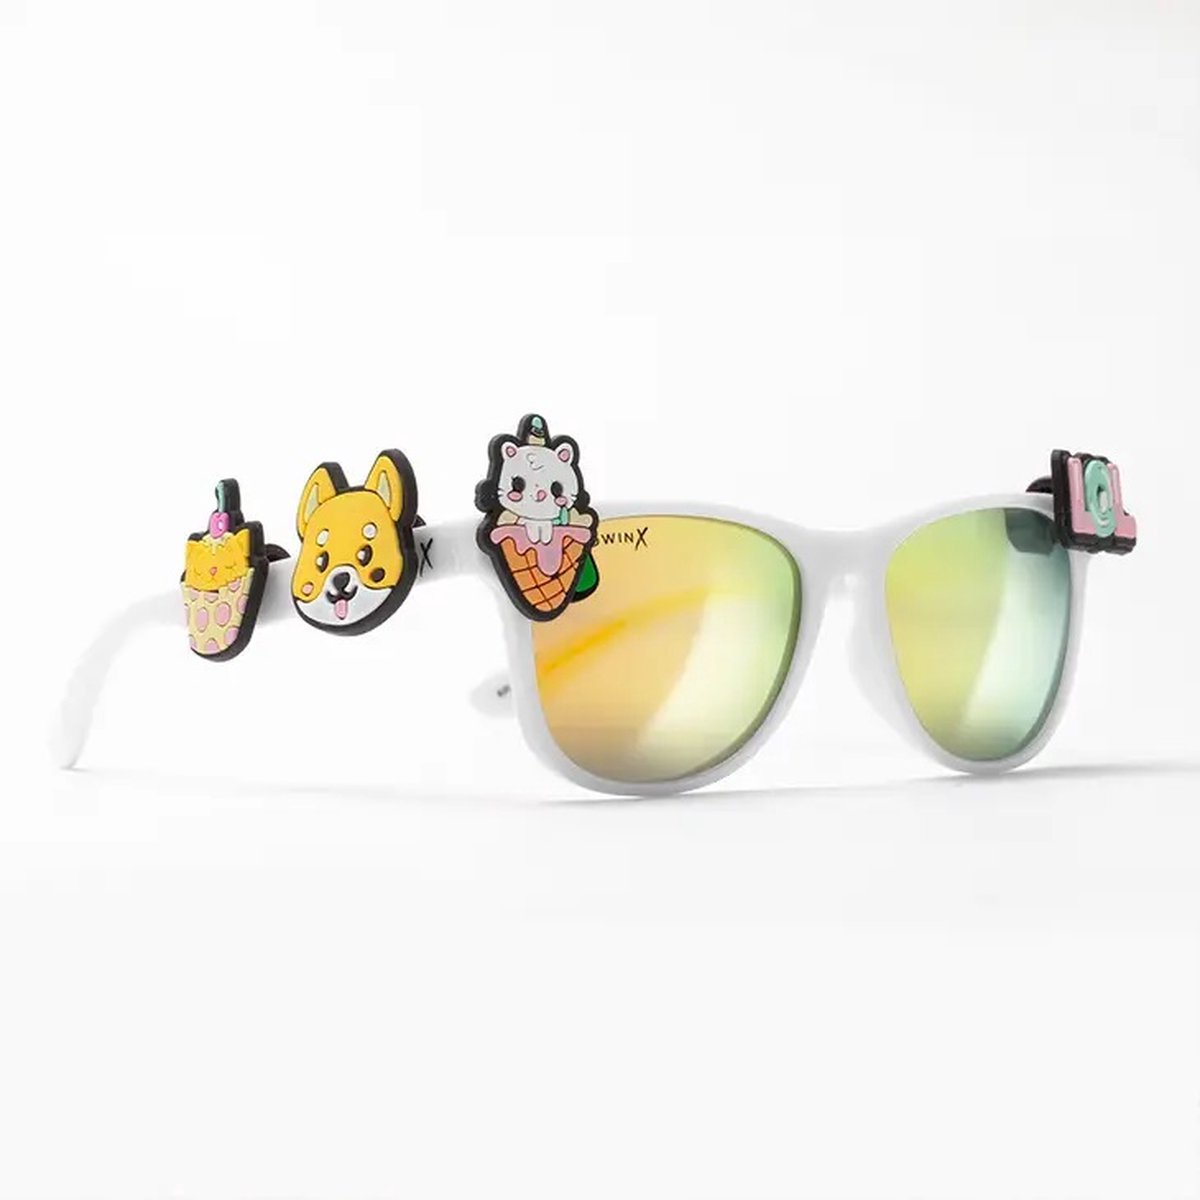 WildWinx - White Kawaii - Kinder zonnebril - kinderzonnebrillen meisjes - kinderzonnebrillen jongens - vanaf 3 jaar - uv400 bescherming - zonnebril - bedels - vintage - hip - stoer - design